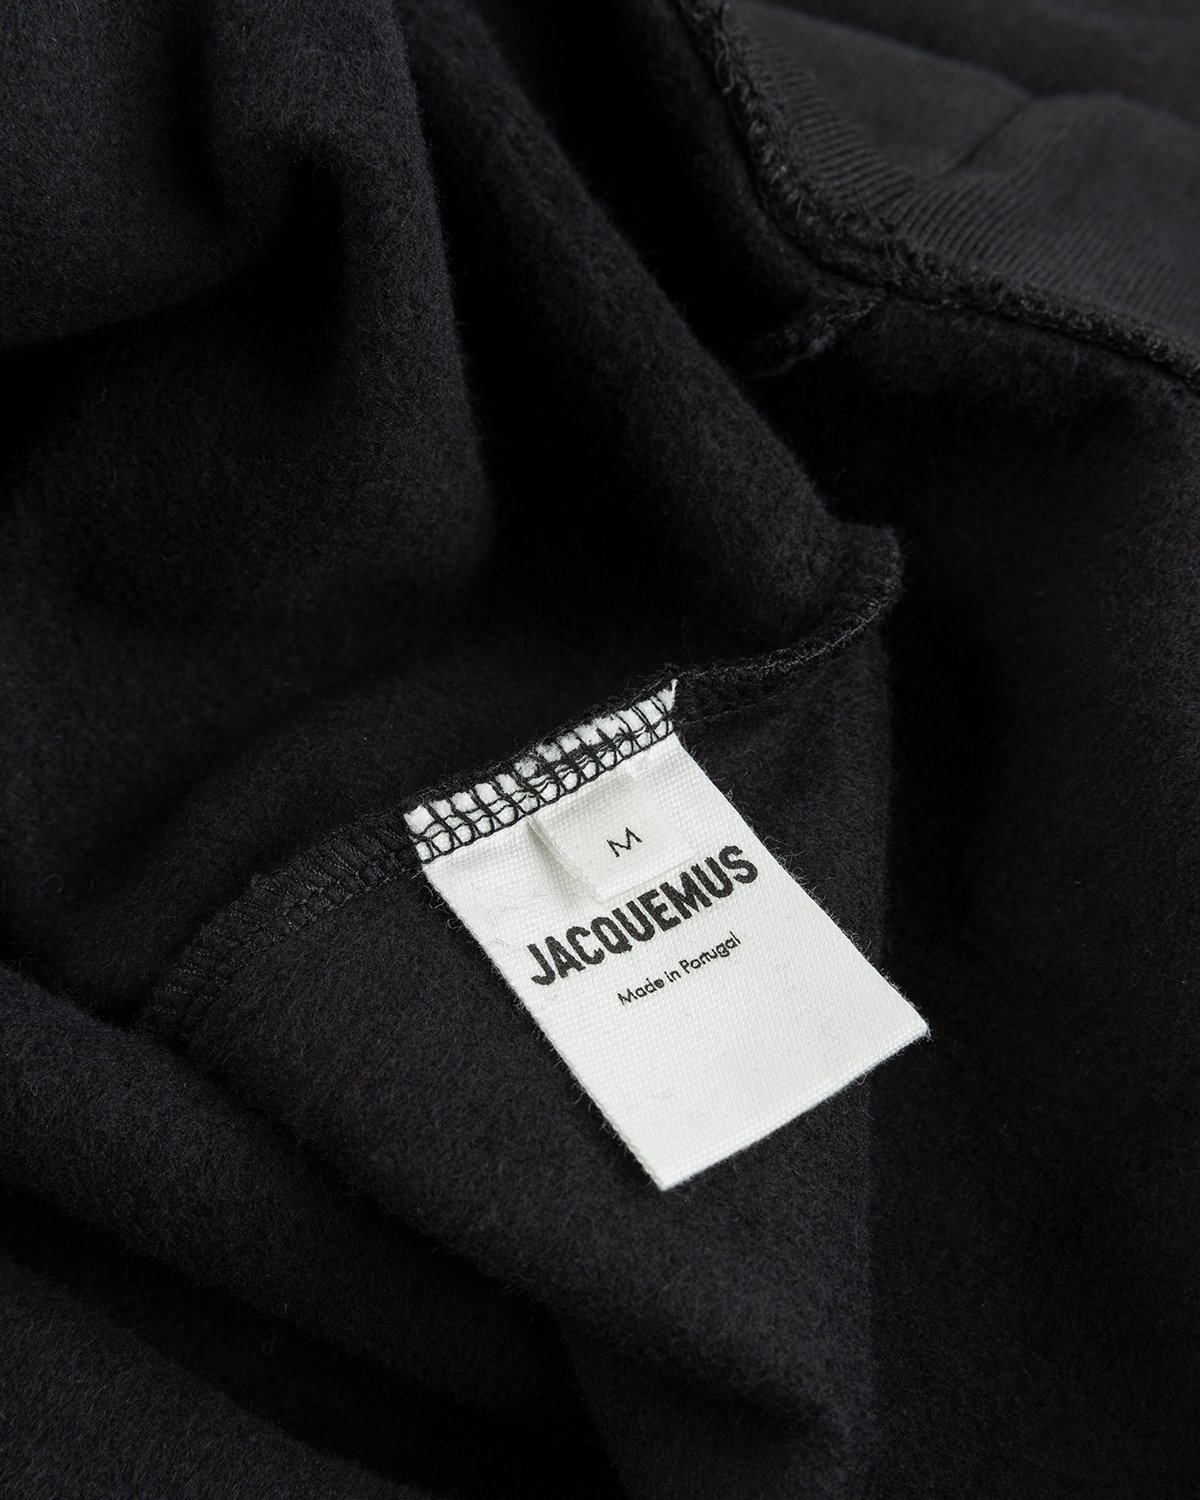 JACQUEMUS - Le Sweartshirt Brode Black - Clothing - Black - Image 4